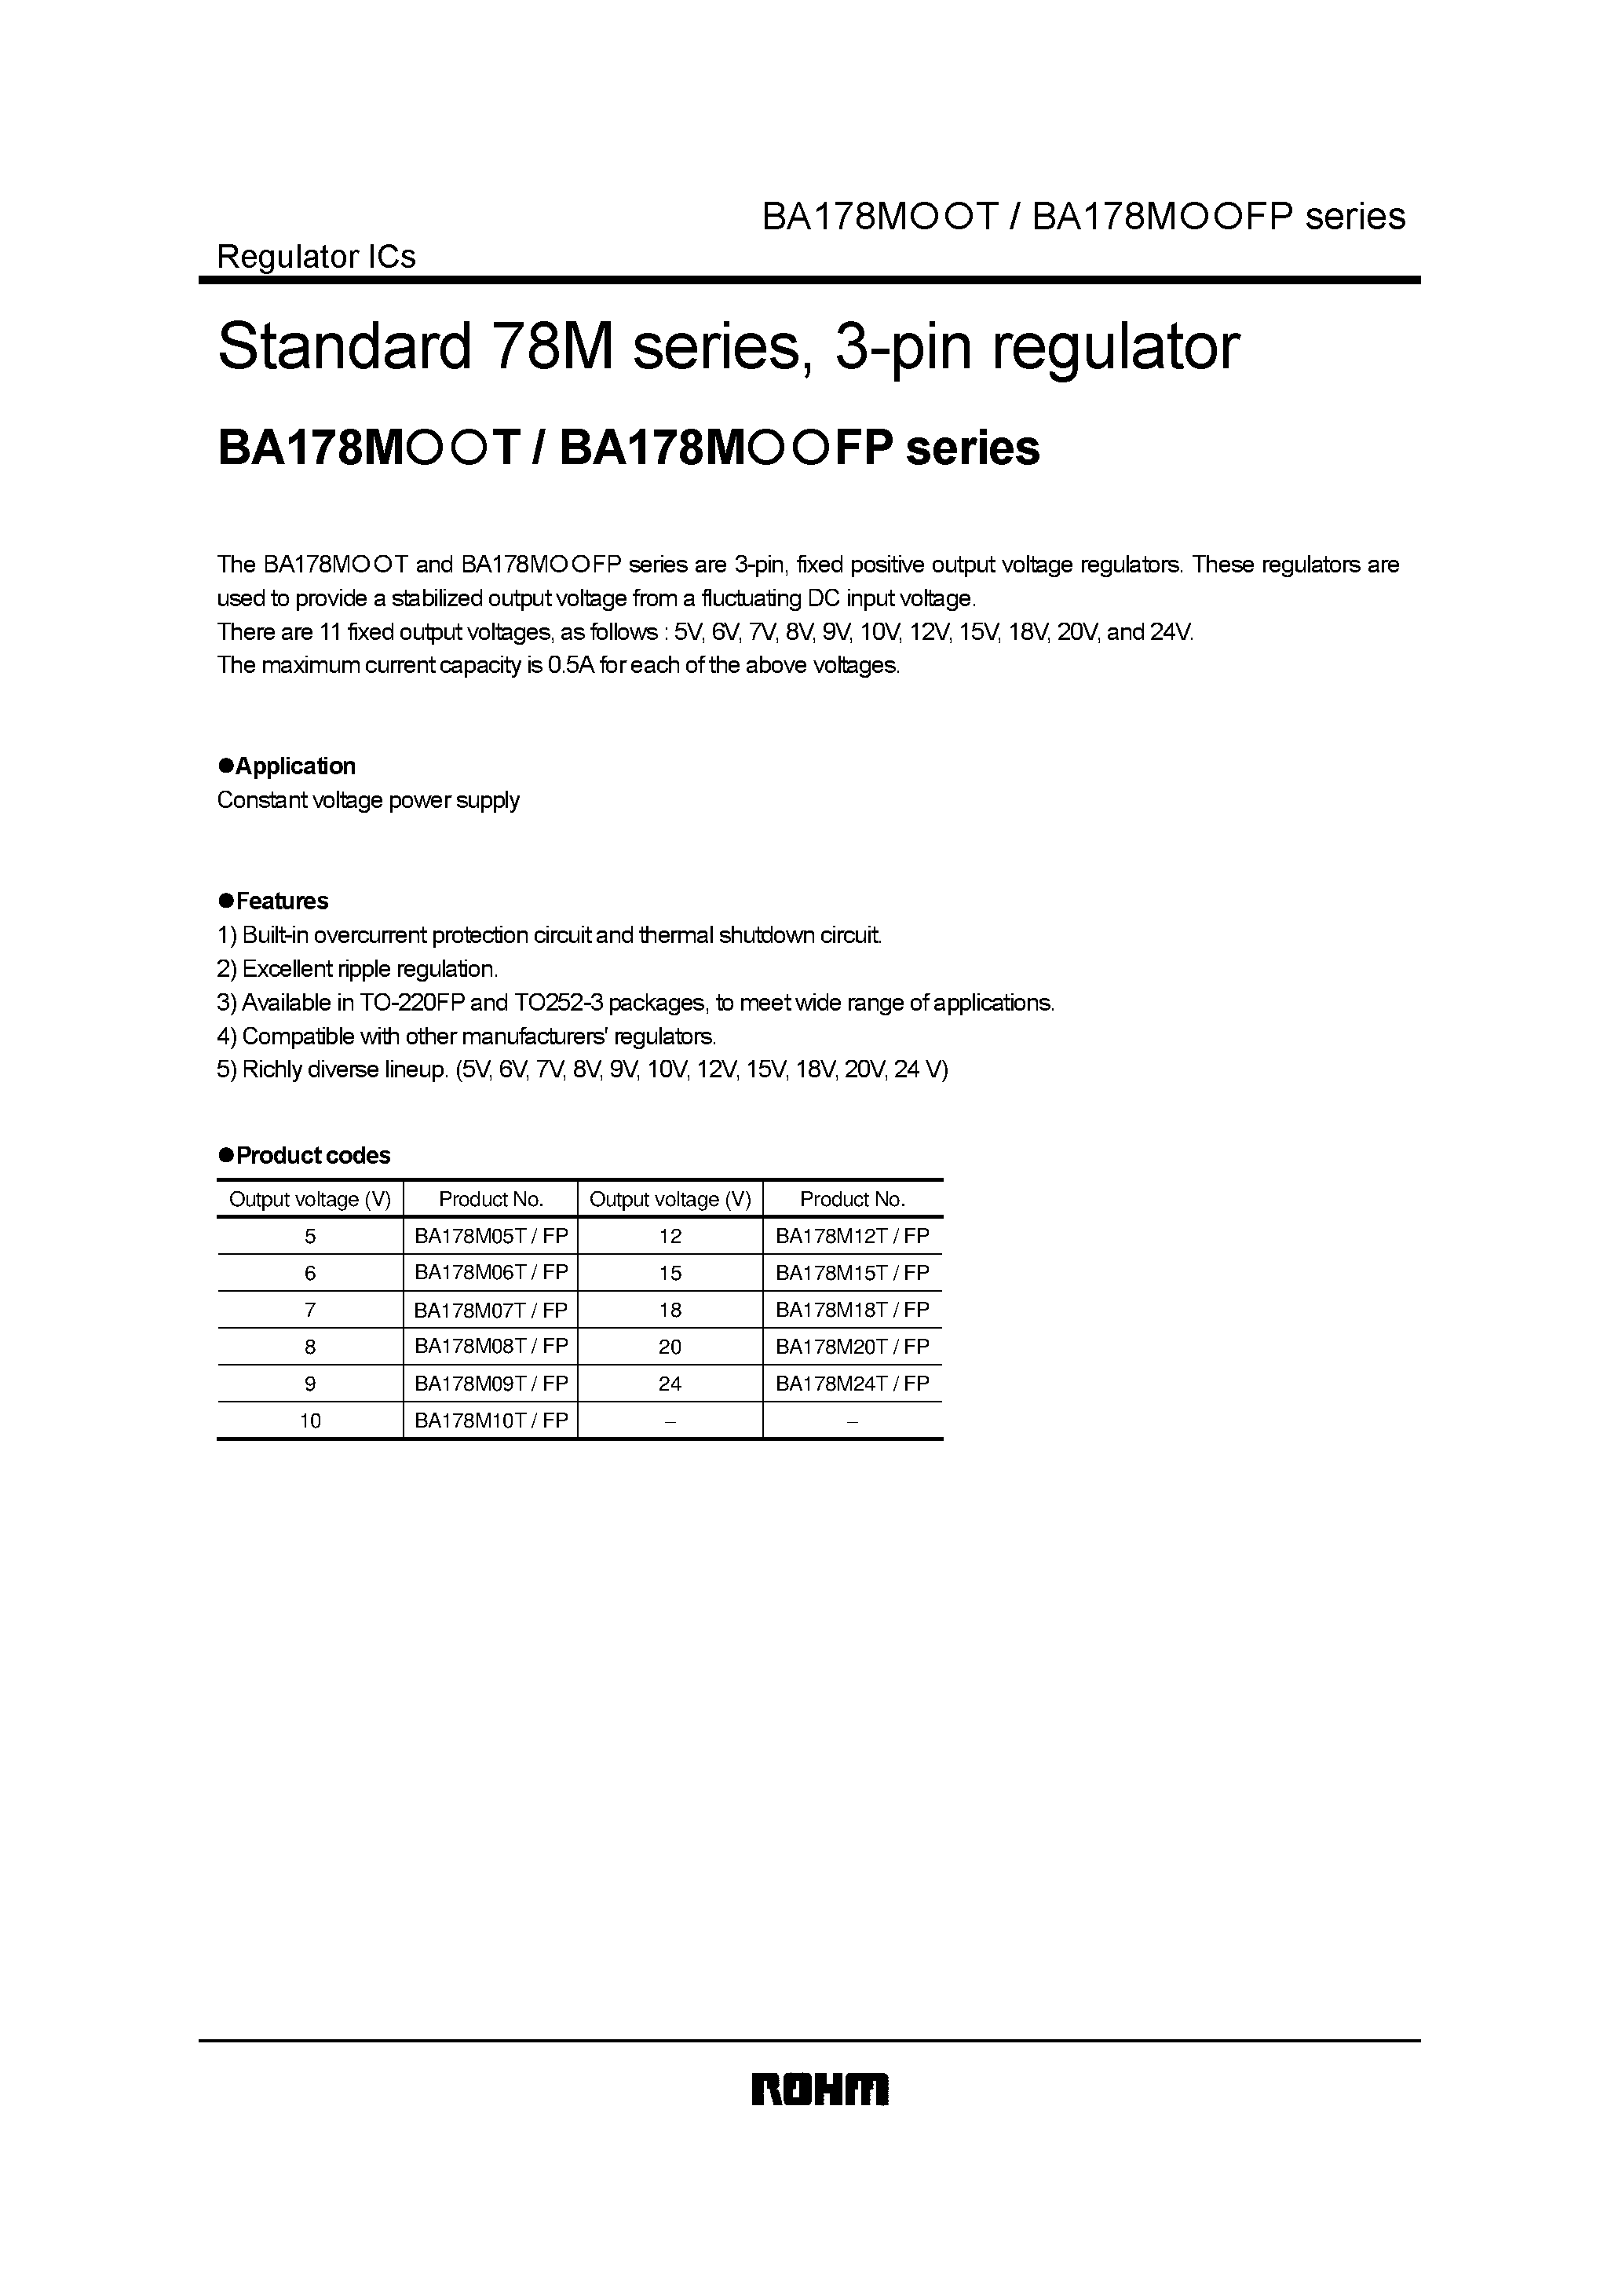 Даташит BA178M10FP - Standard 78M series/ 3-pin regulator страница 1